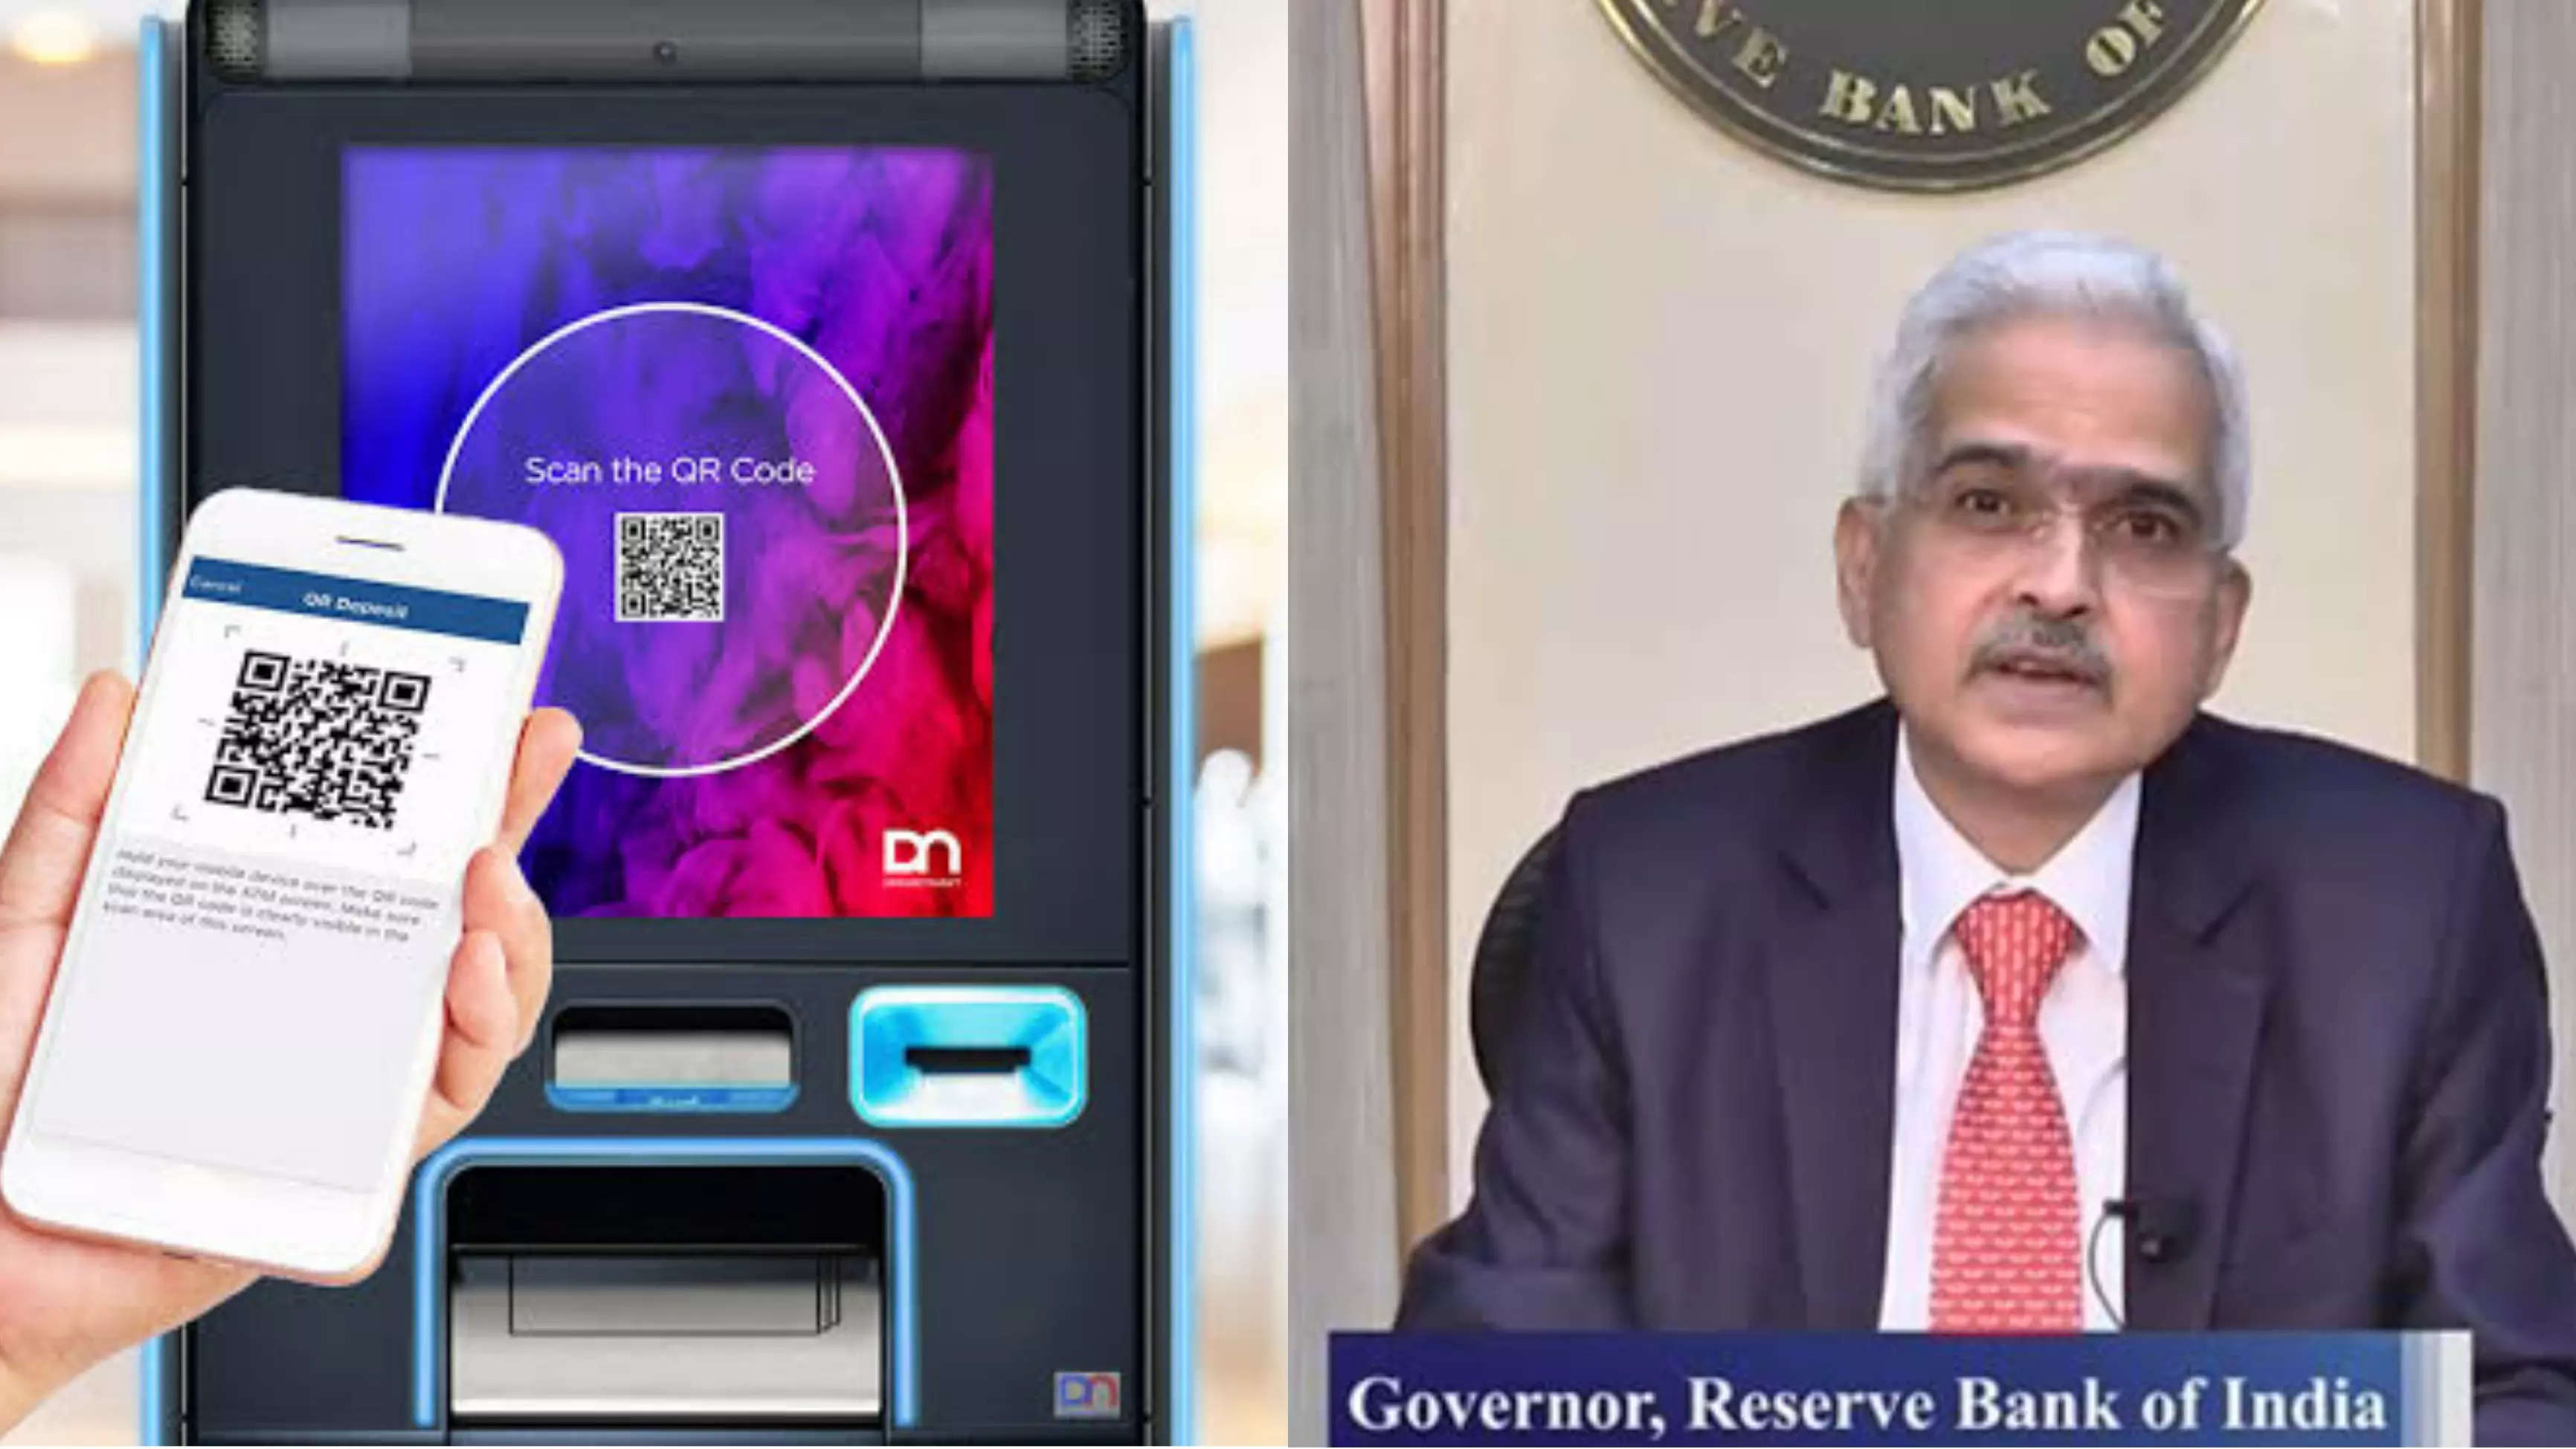 rbi: Cardless cash in ATMs via UPI to be extended soon: RBI Governor Das,  BFSI News, ET BFSI